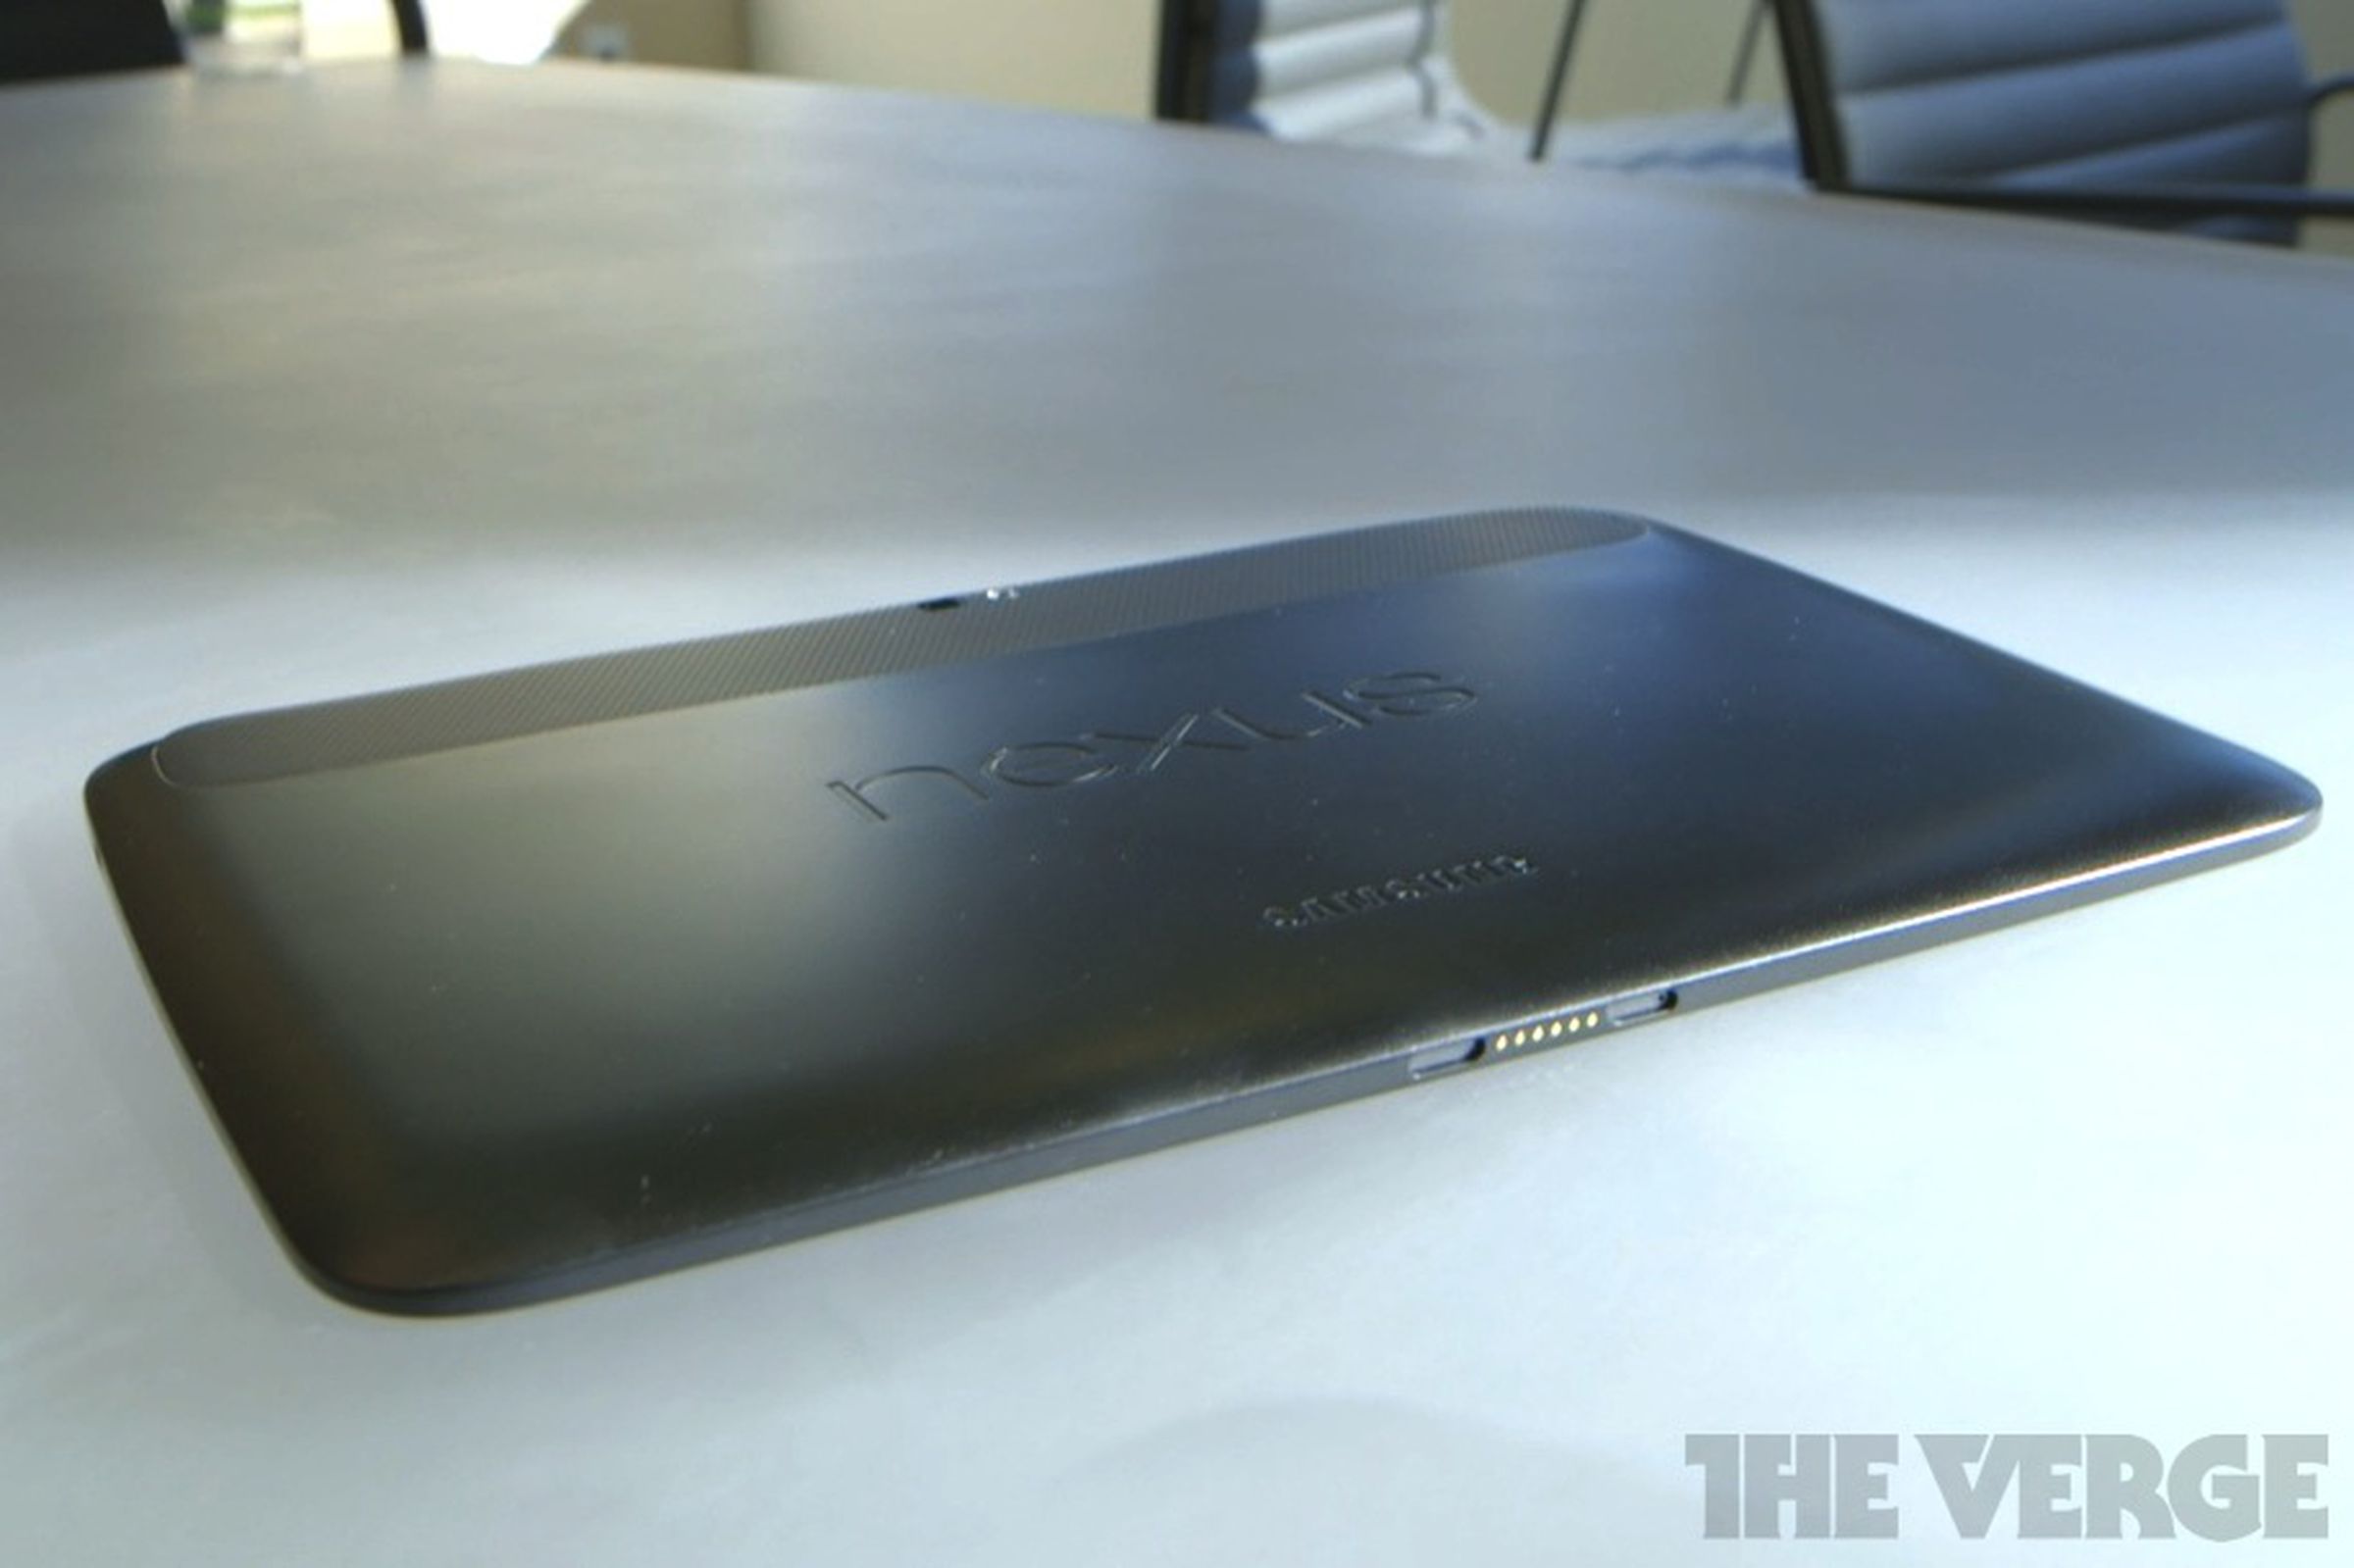 Google Nexus 10 hands-on photos